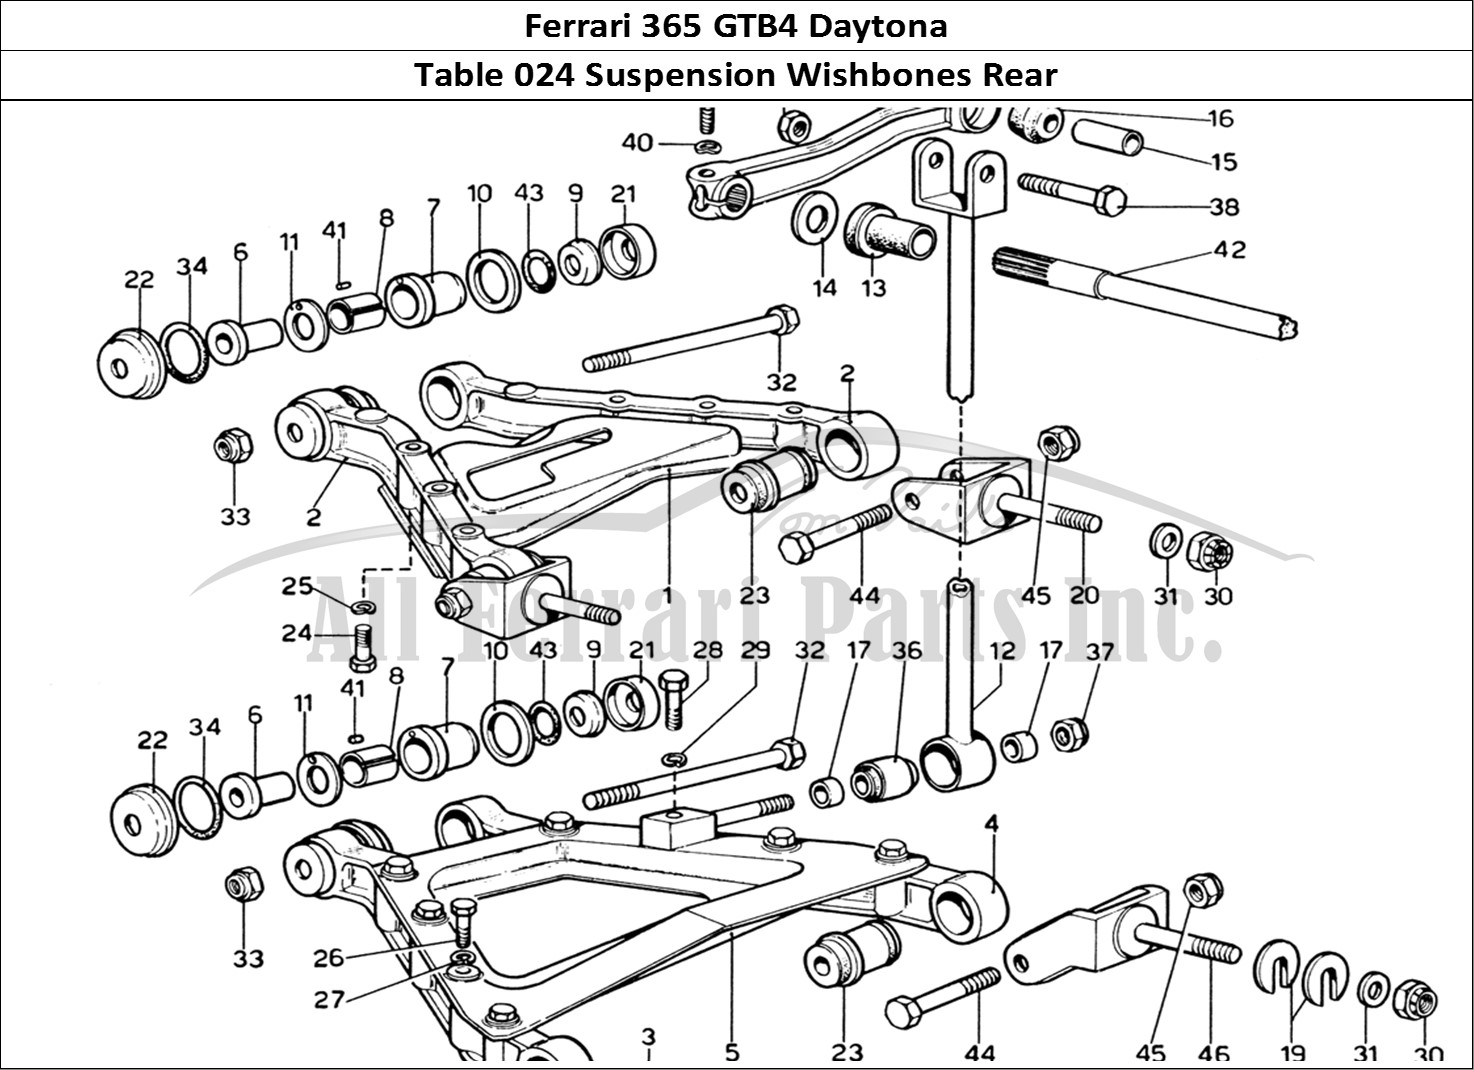 Ferrari Parts Ferrari 365 GTB4 Daytona (1969) Page 024 Rear Suspension